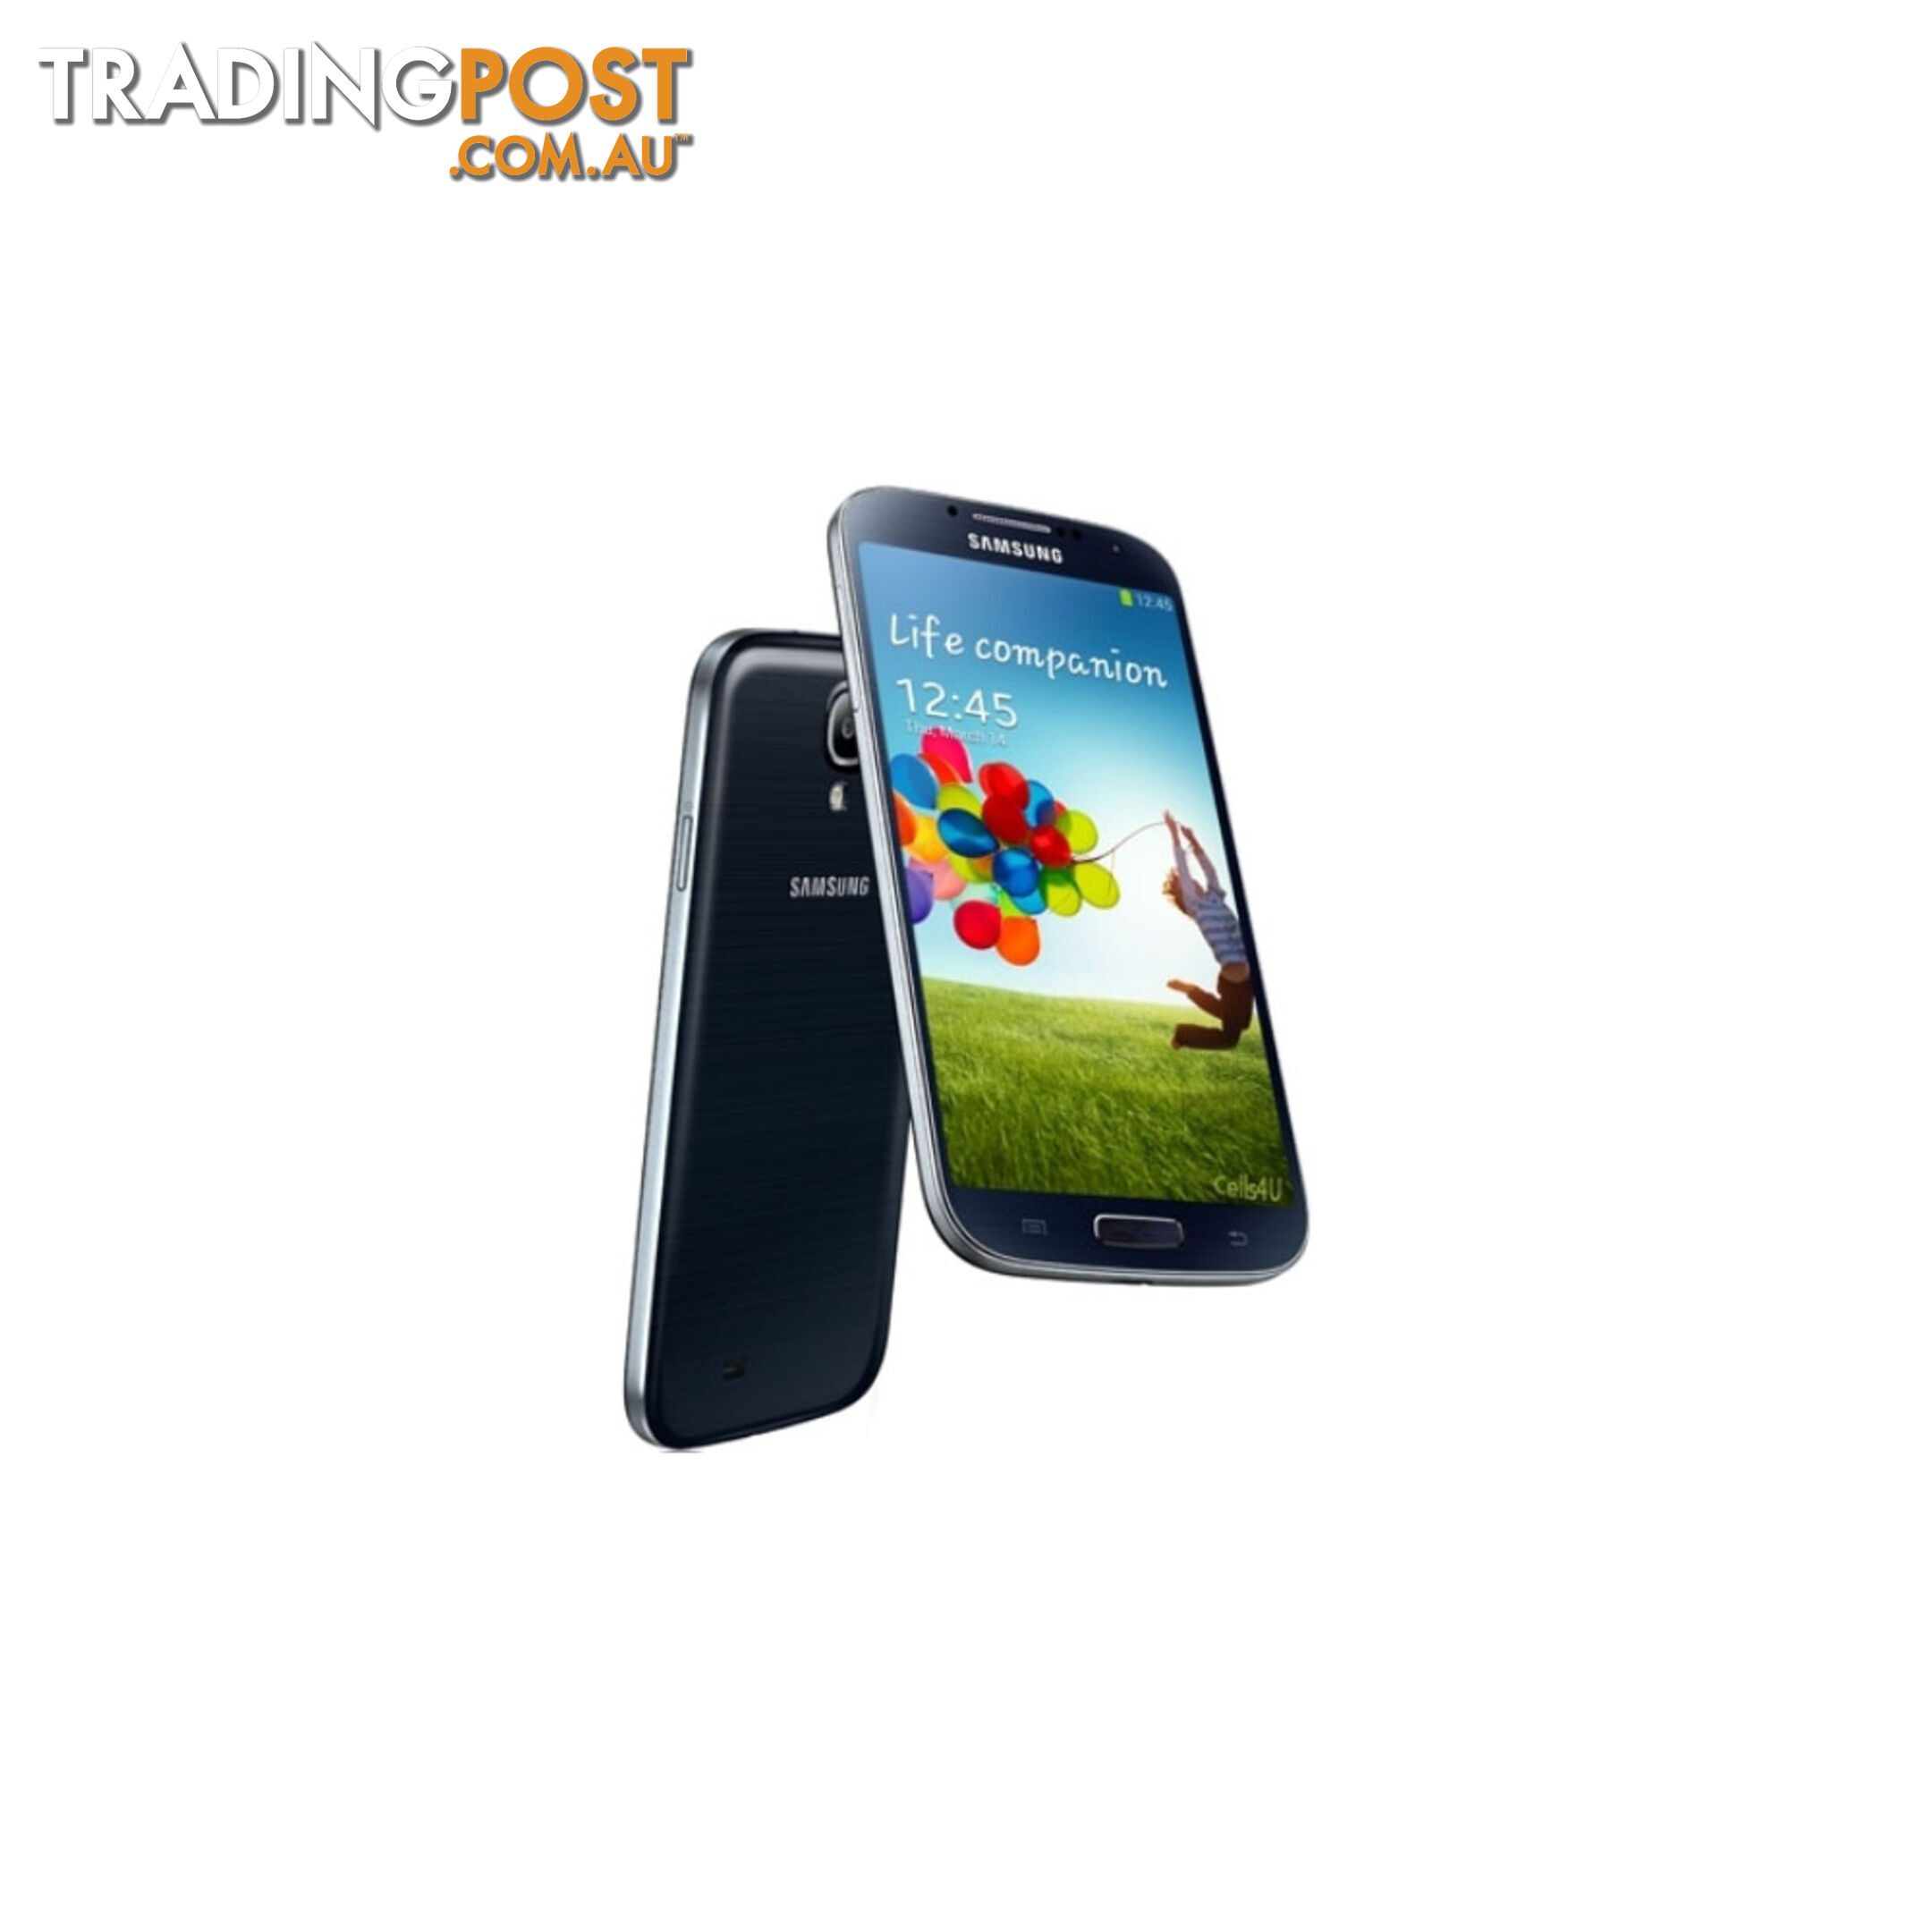 Samsung Galaxy S4 i9505 Black Mobile Phone 16GB Refurbished